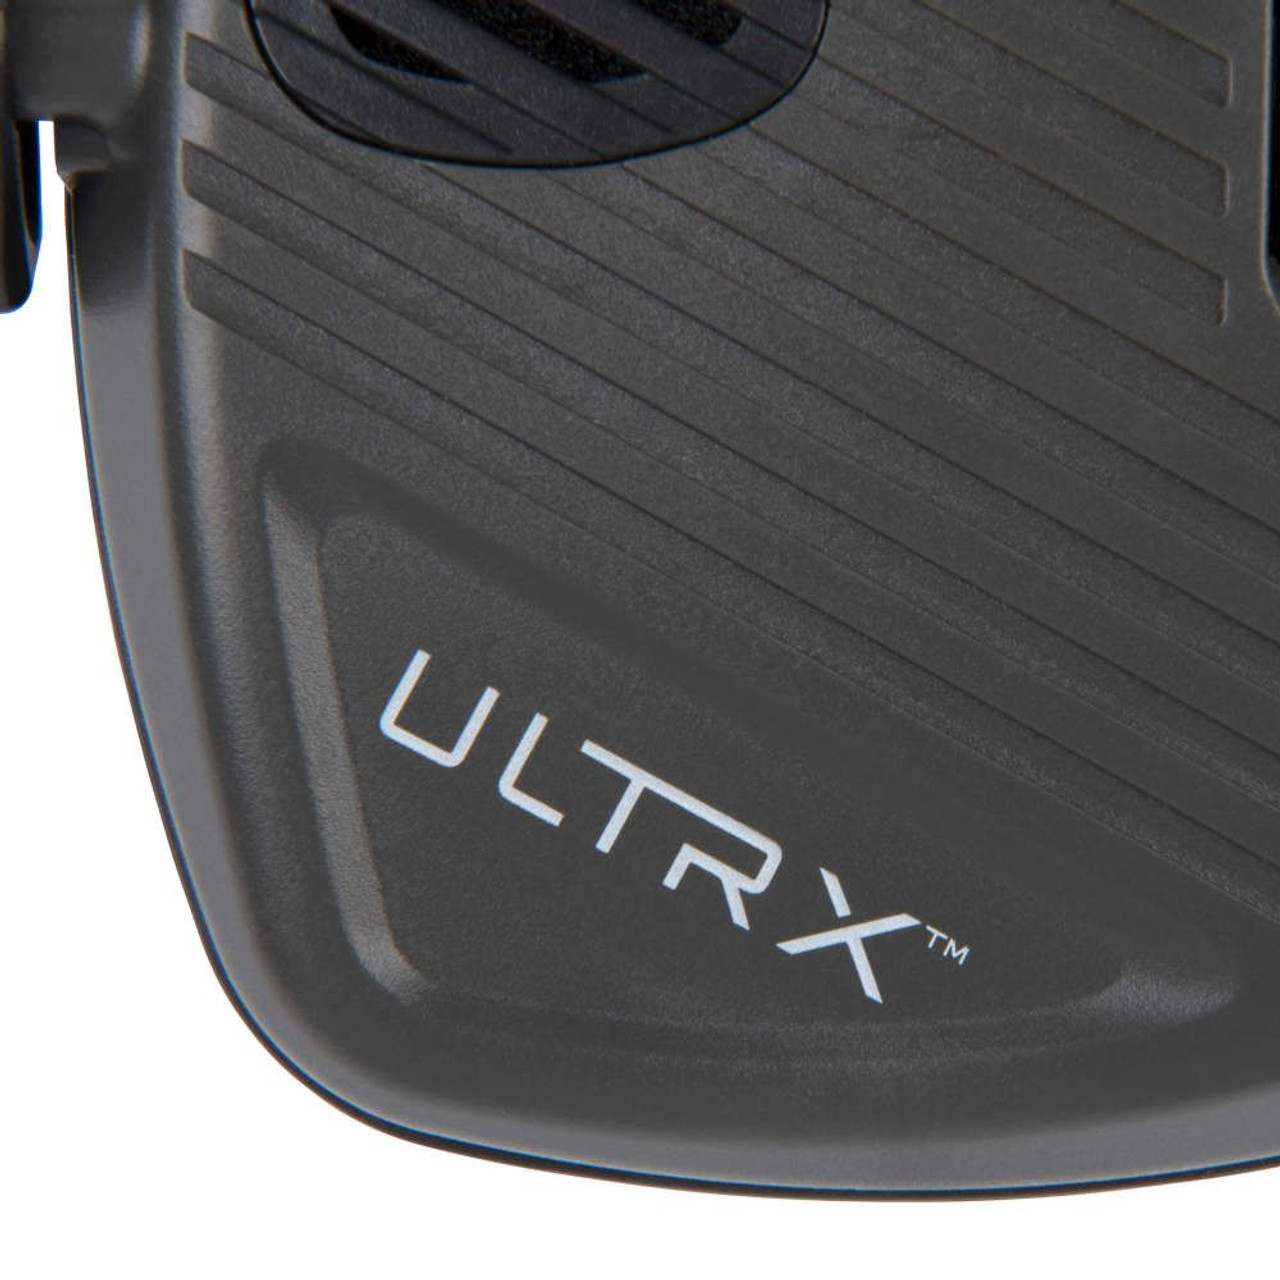 ULTRX Stereo Electronic Earmuff